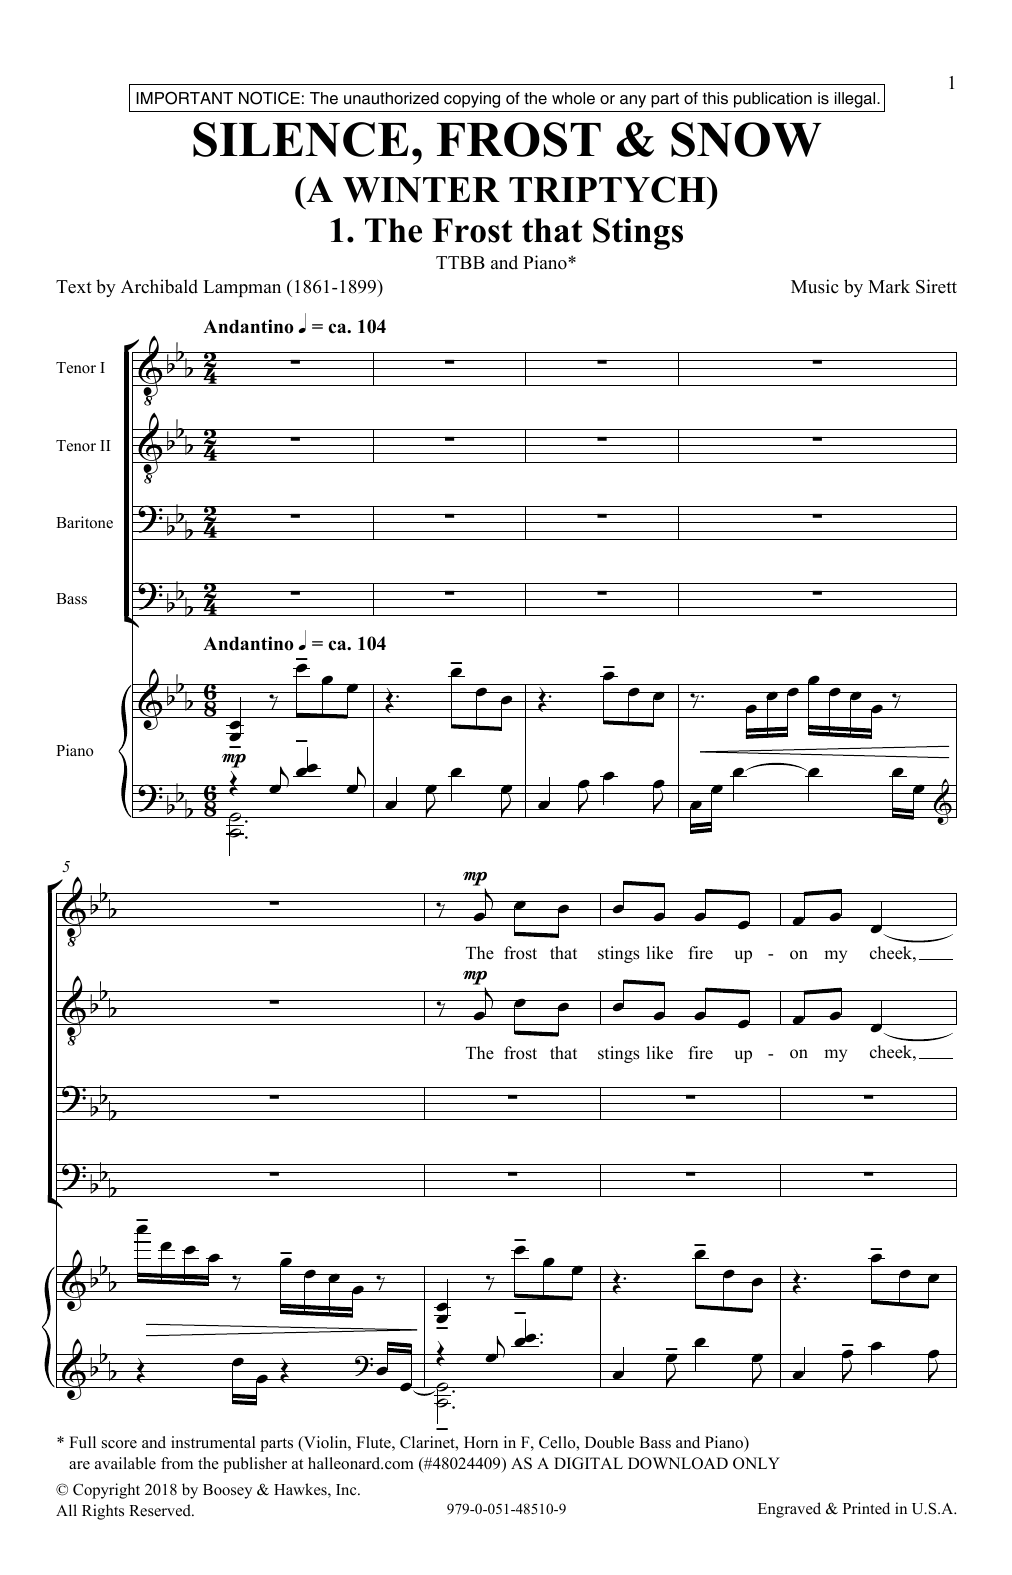 Mark Sirett Silence, Frost & Beauty (A Winter Triptych) sheet music notes and chords arranged for TTBB Choir